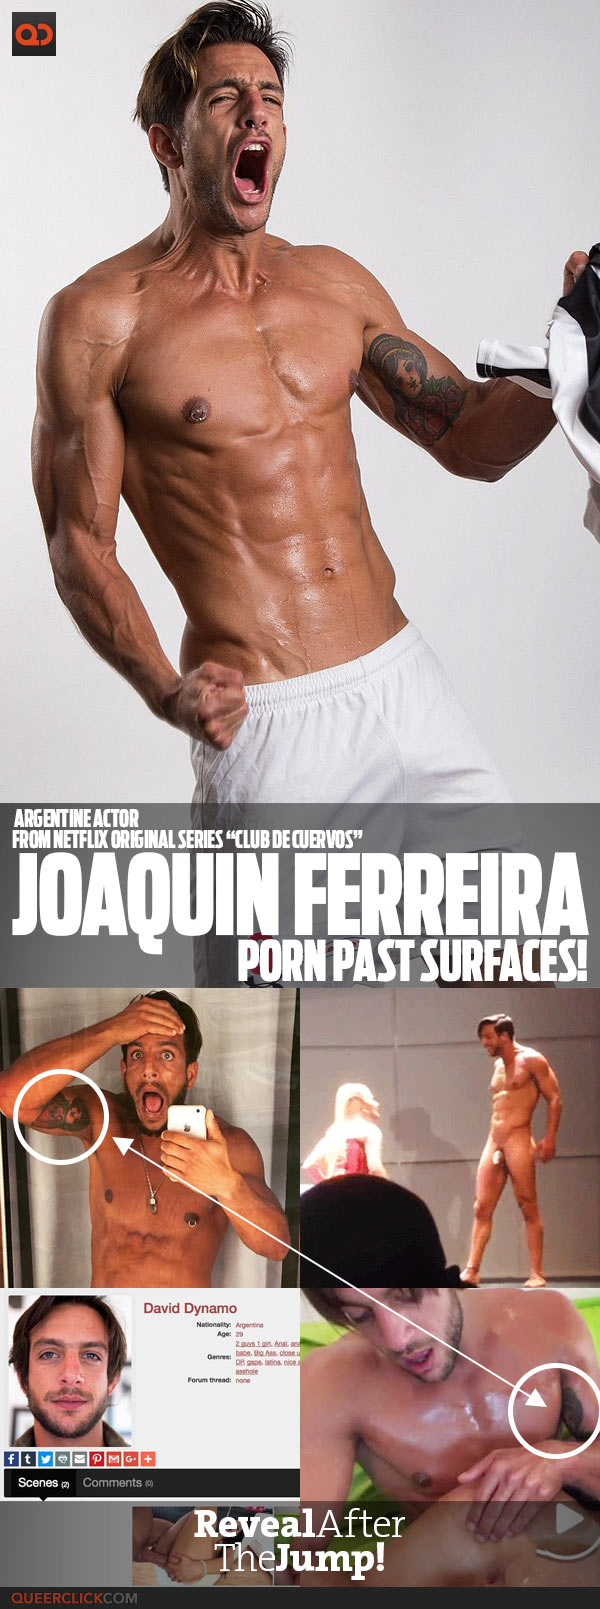 Joaquín Ferreira, Argentine Actor From Netflix Original Series “Club De Cuervos”, Porn Past Surfaces!